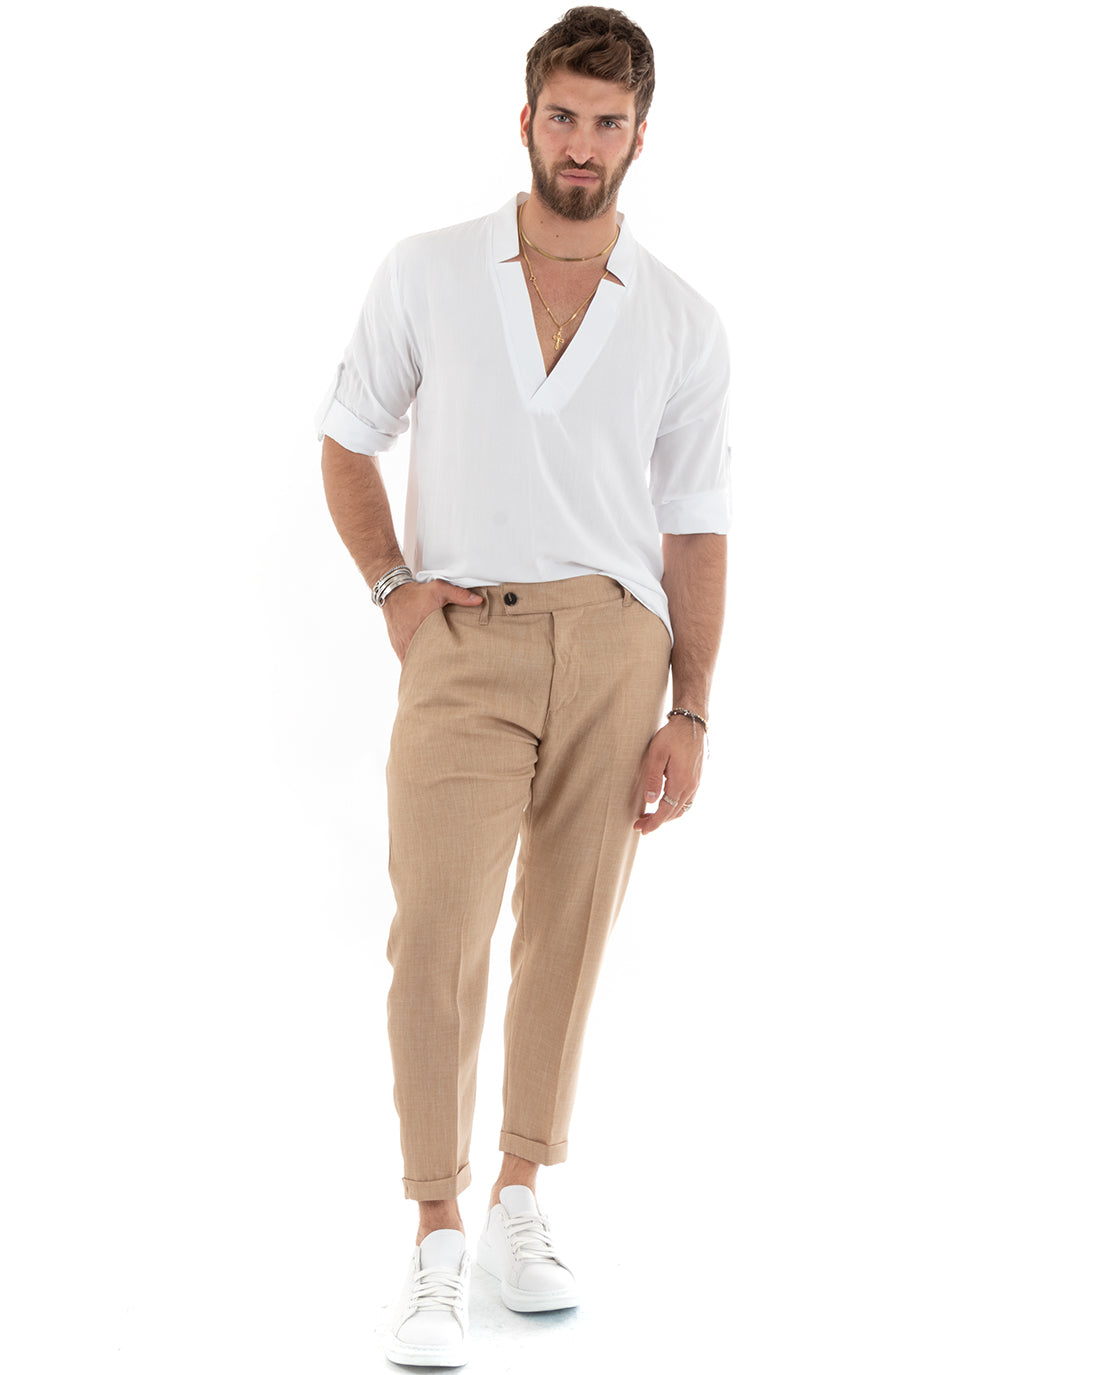 Men's Shirt V-Neck Long Sleeve Soft Light Viscose White GIOSAL-C2695A